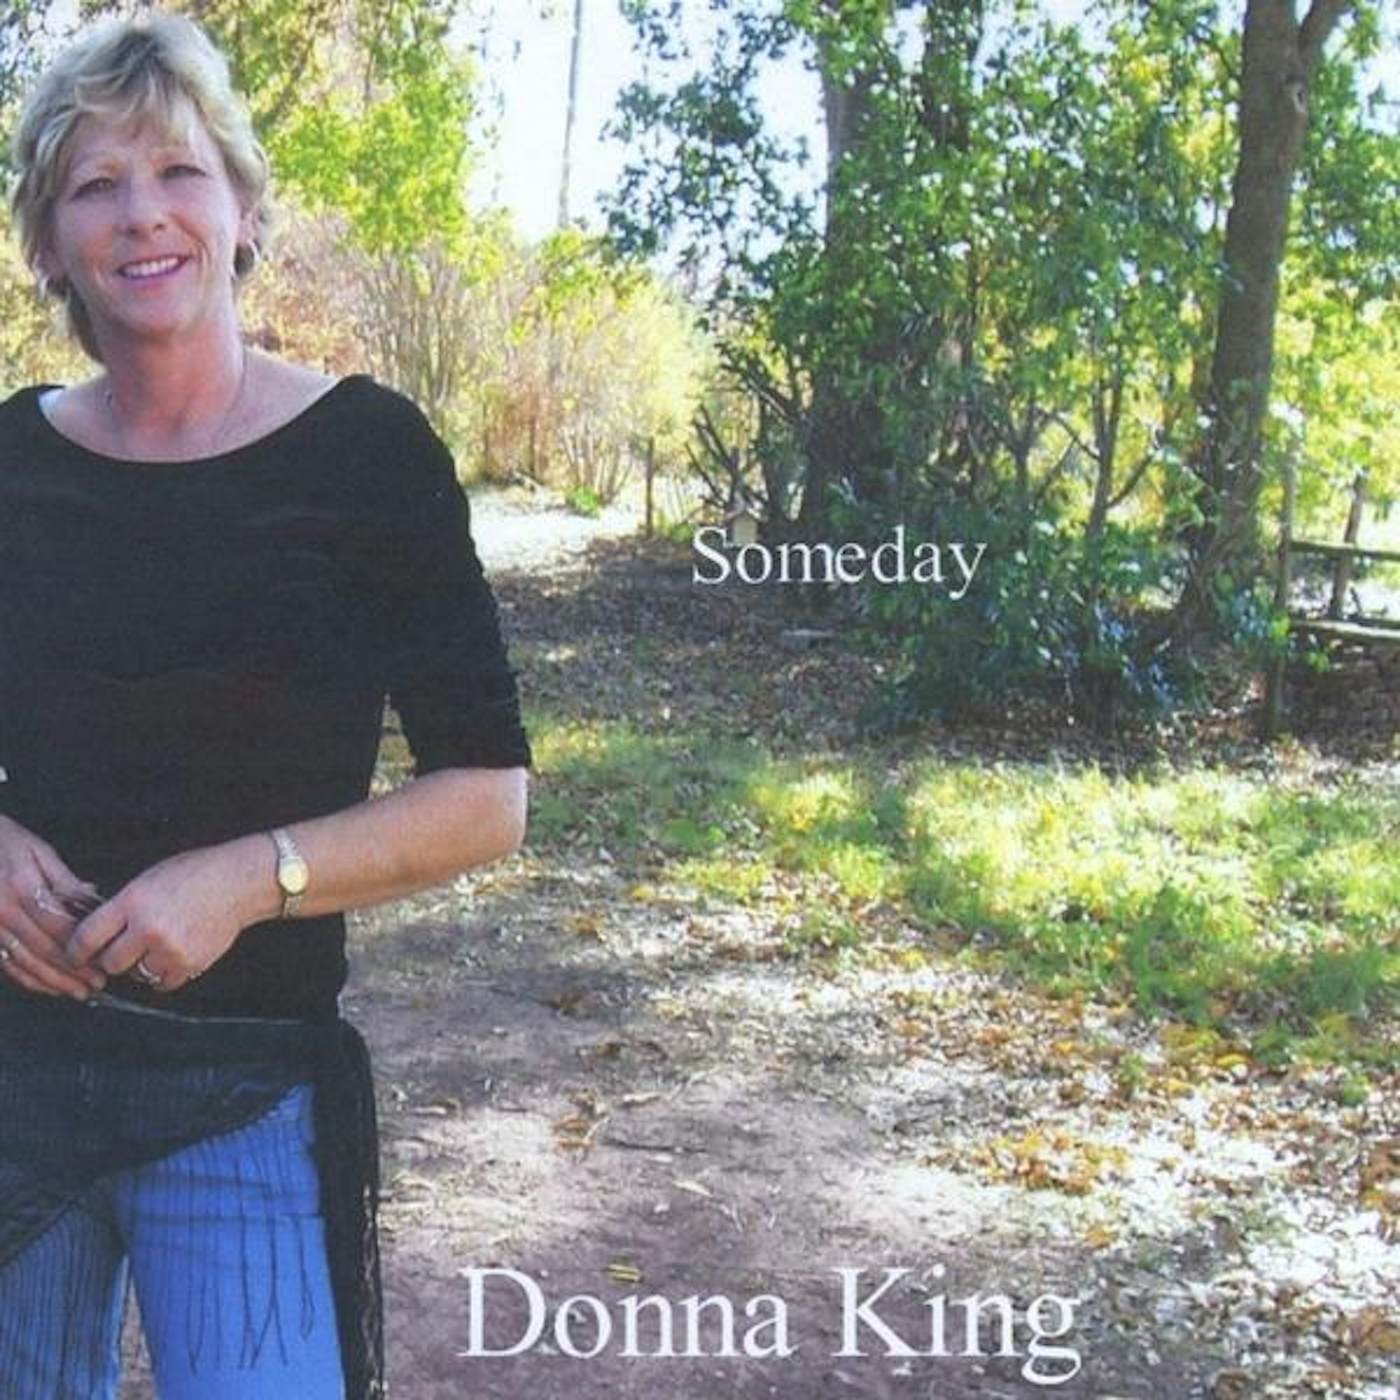 Donna King SOMEDAY CD